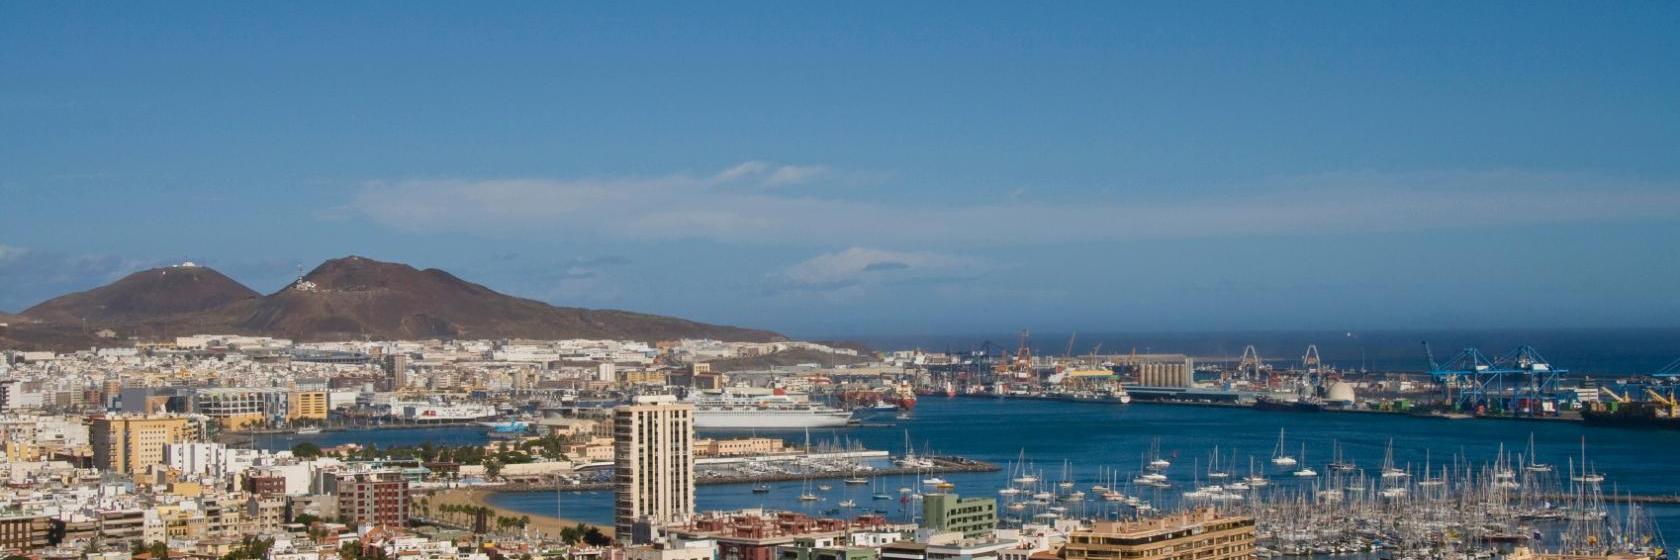 10 Best Las Palmas de Gran Canaria Hotels, Spain (From $32)